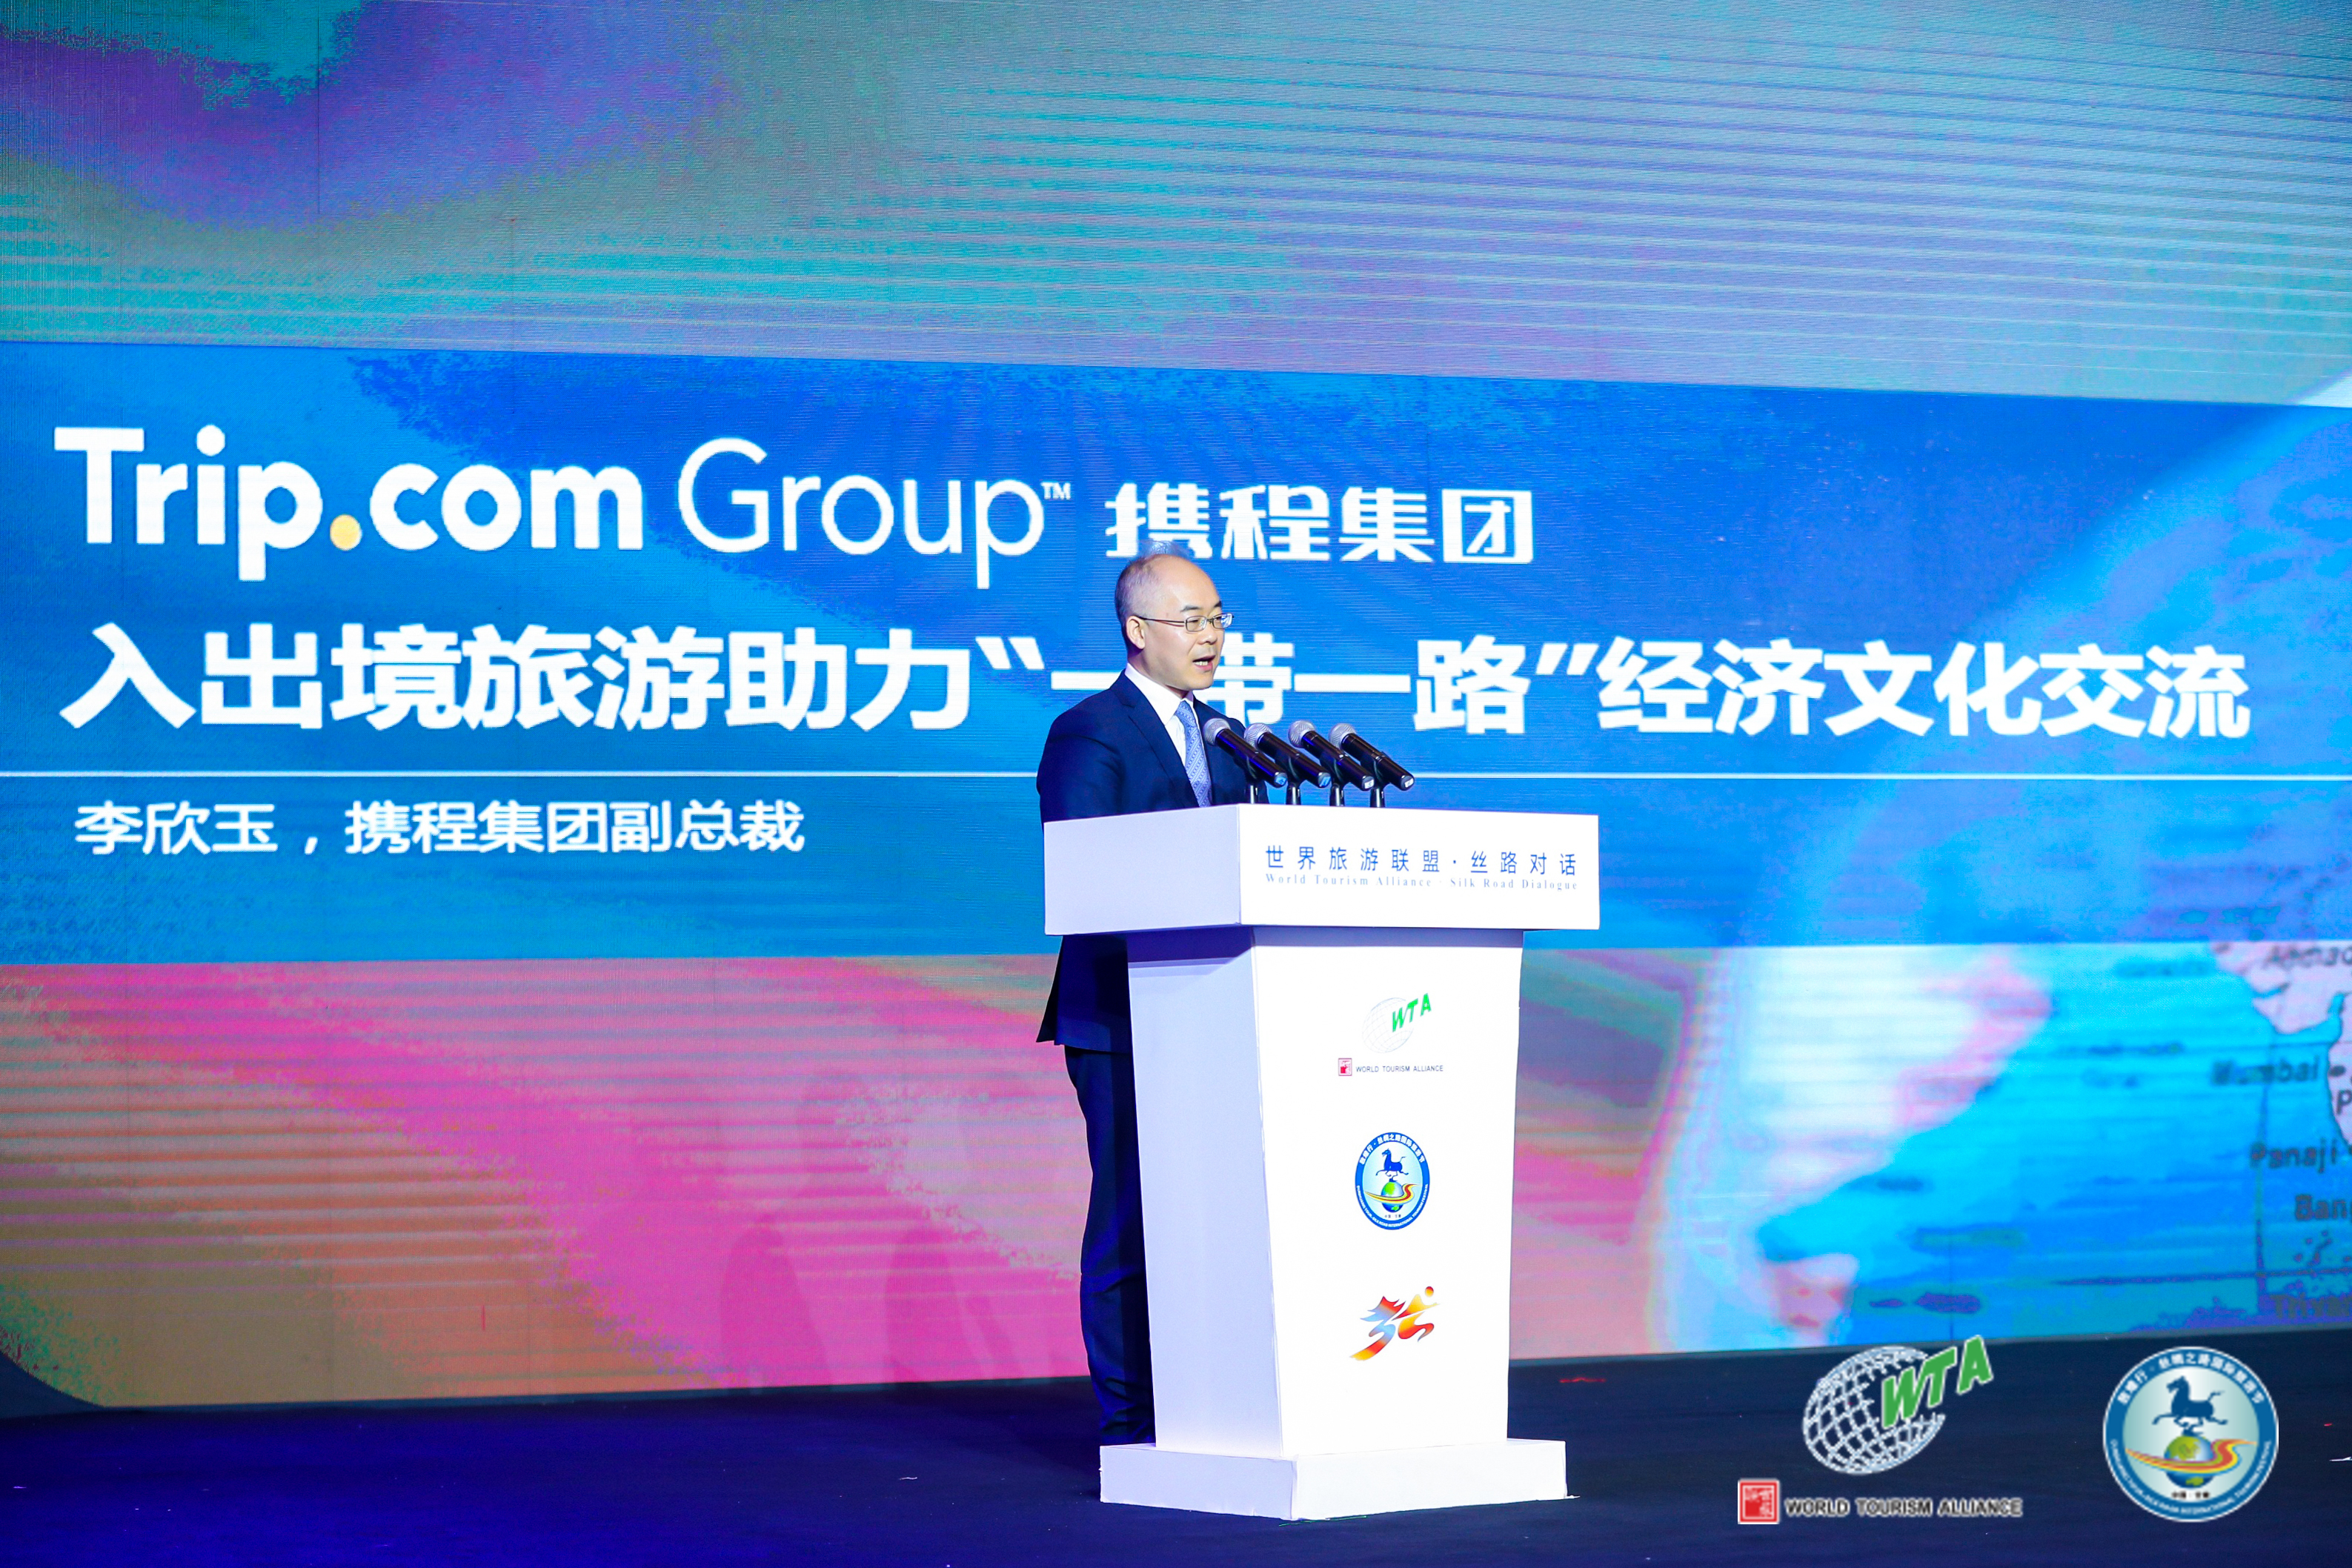 Li Xinyu, Vice President of Trip.com Group